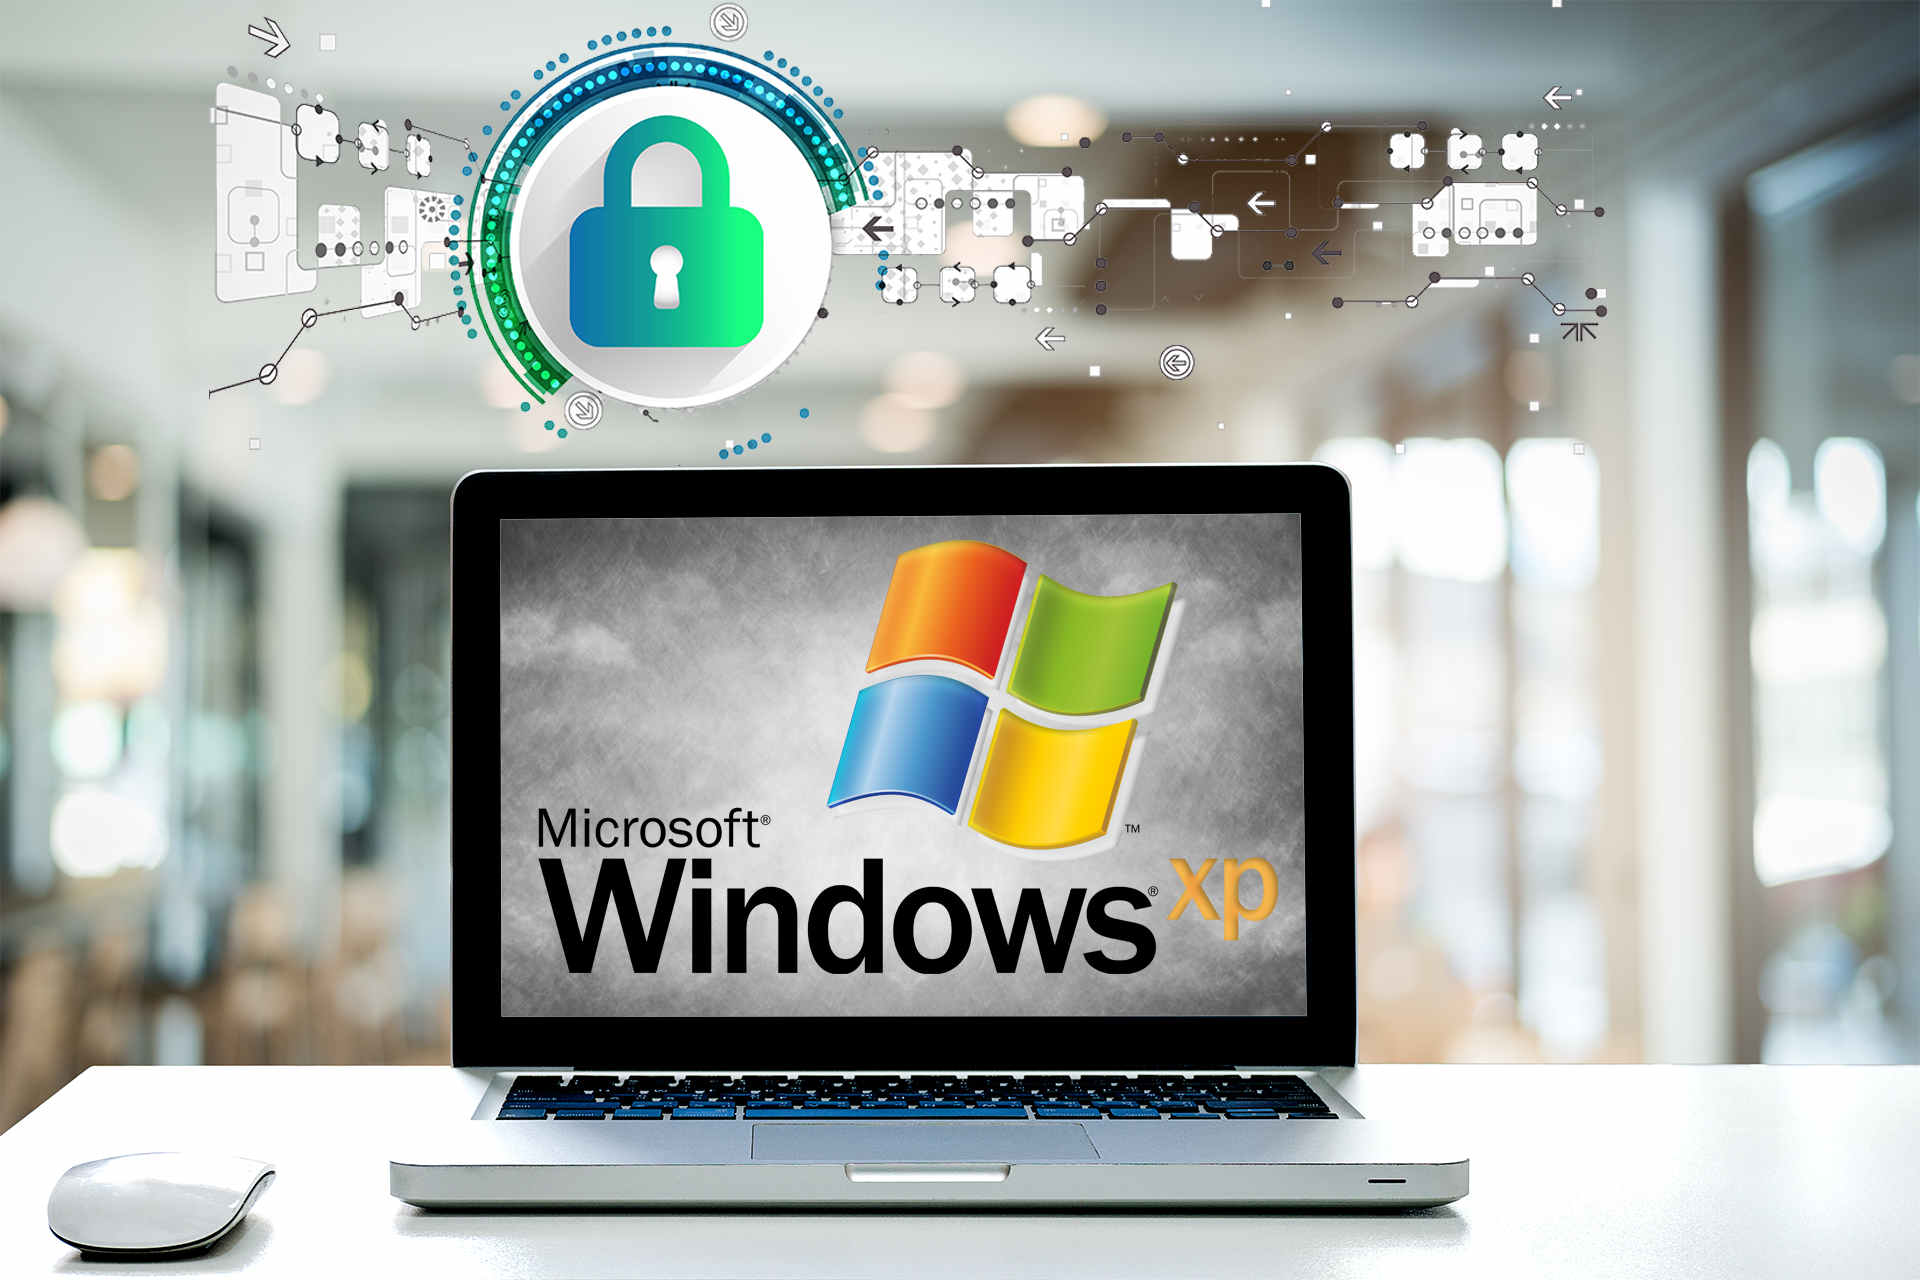 antivirus software free download for windows xp full version 2014